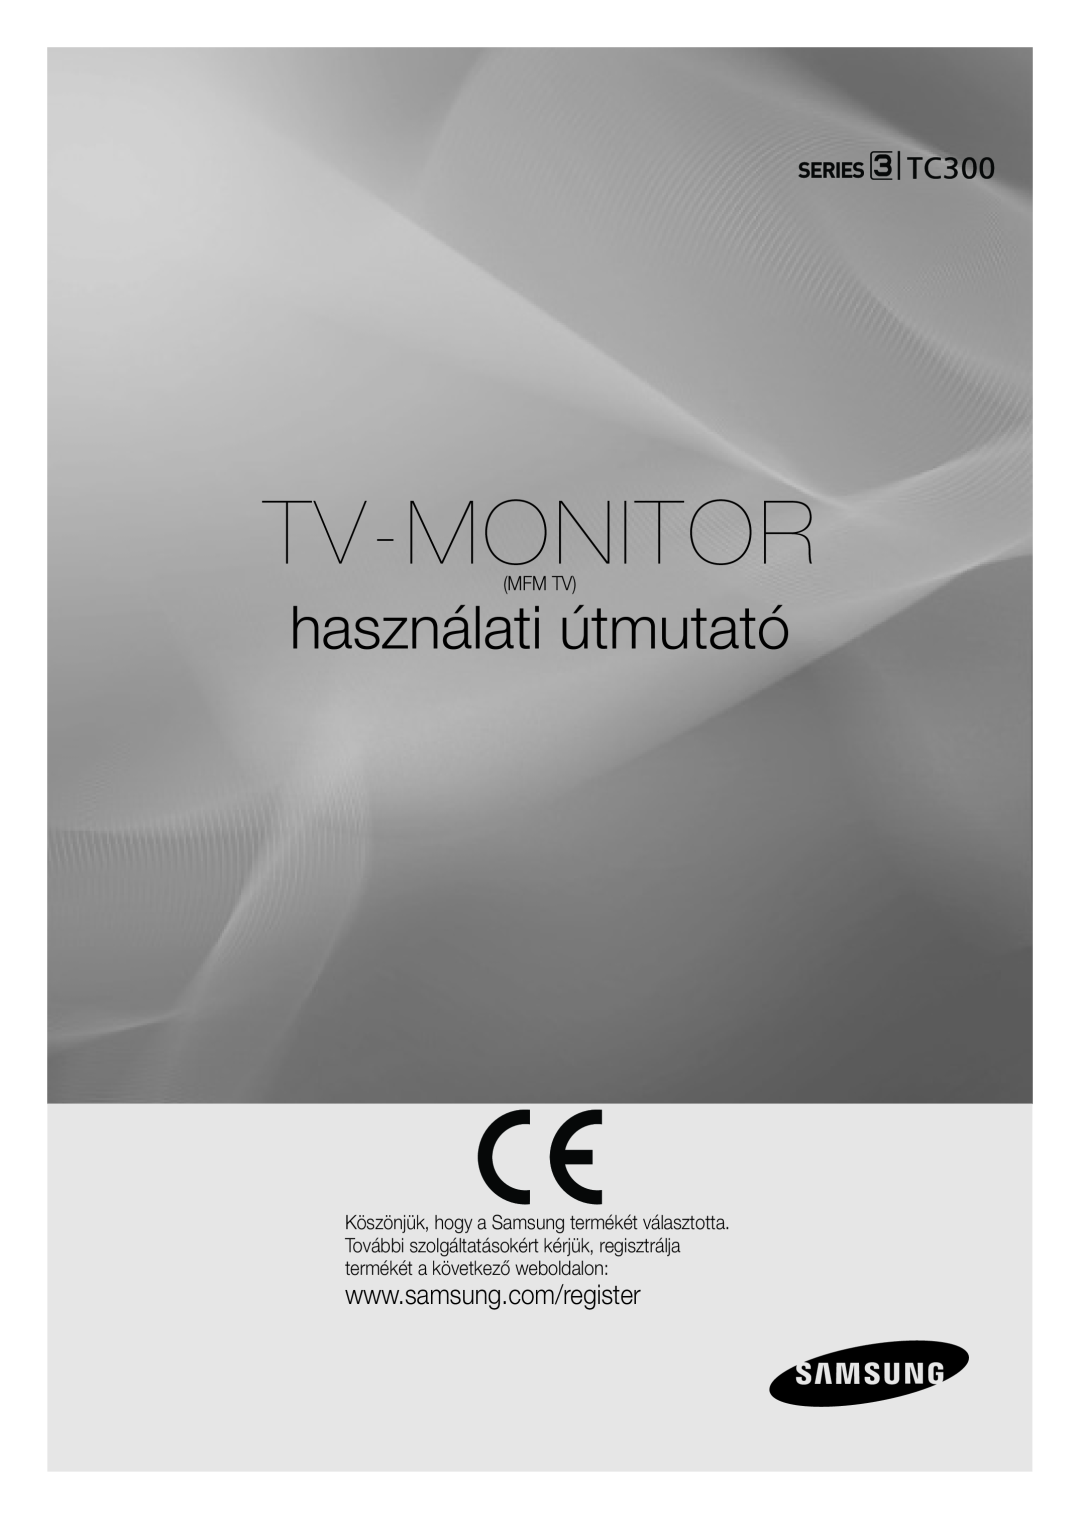 Samsung LT19C300EW/EN, LT24C300EWZ/EN, LT24C300EW/EN, LT27C370EW/EN manual Mfm Tv, Tv-Monitor, használati útmutató, TC300 